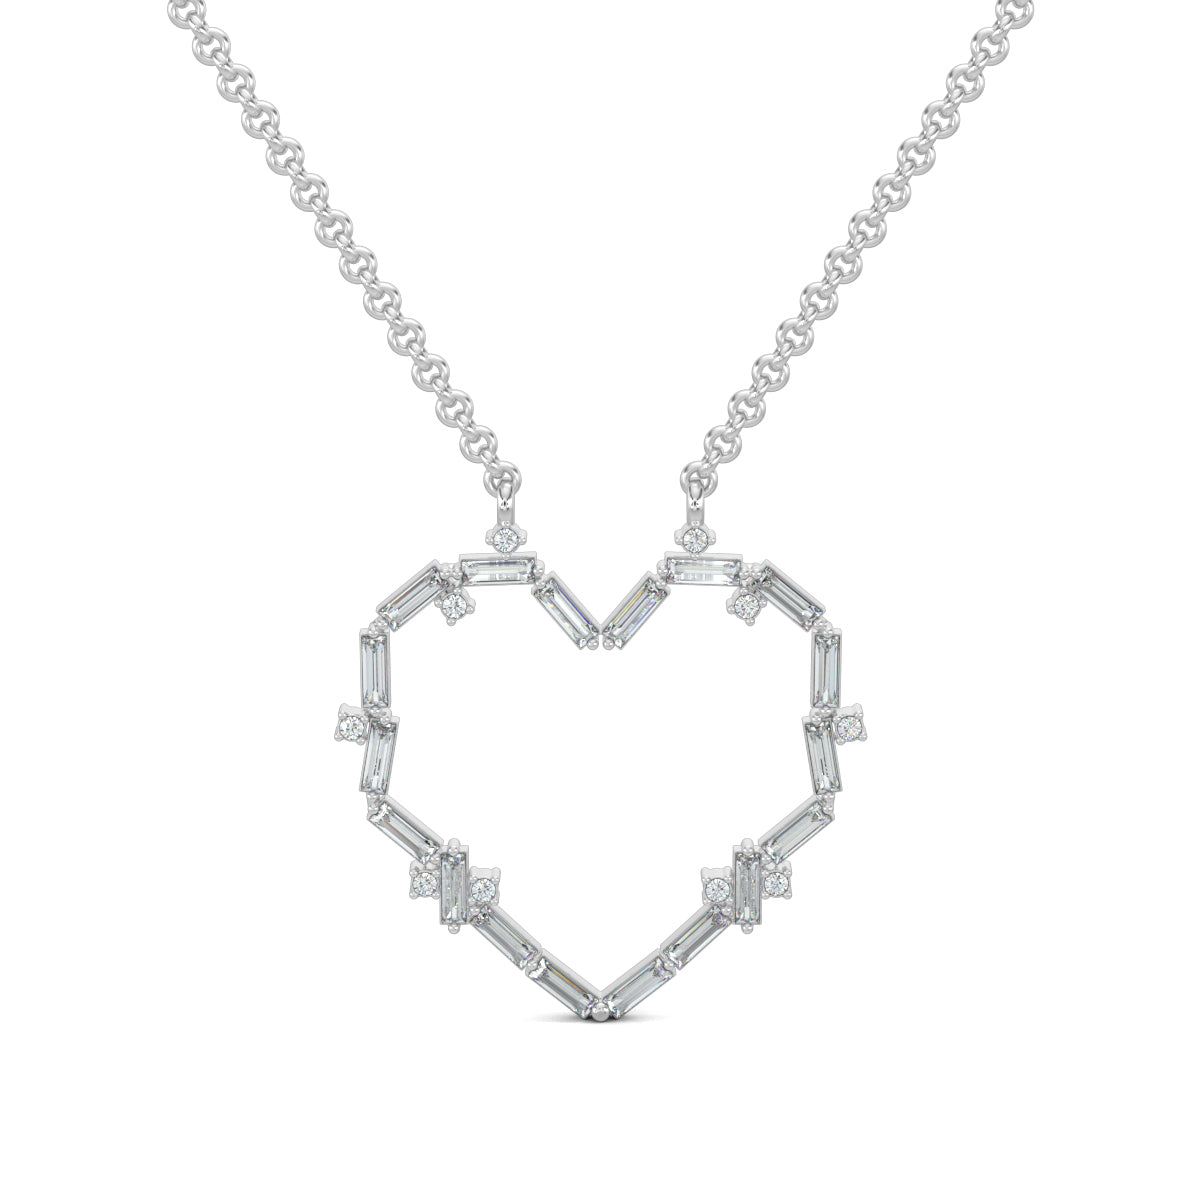 White Gold, Diamond Pendant, Ethereal Love Pendant, Lab-grown diamonds, heart-shaped pendant, baguette diamonds, round diamonds, casual jewelry